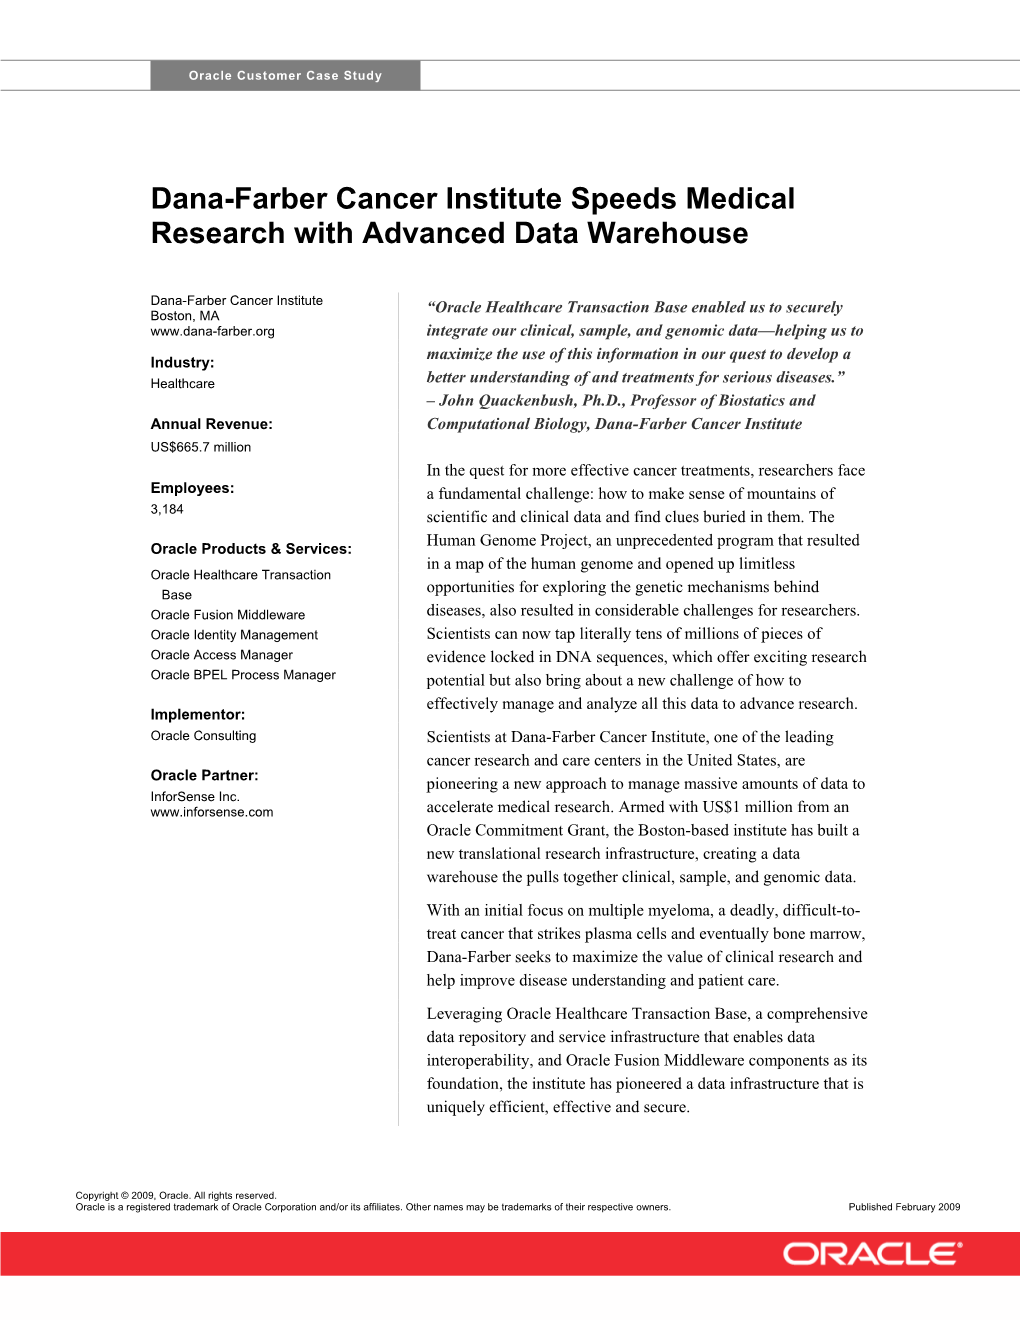 Dana-Farber Cancer Institute: Oracle Customer Case Study